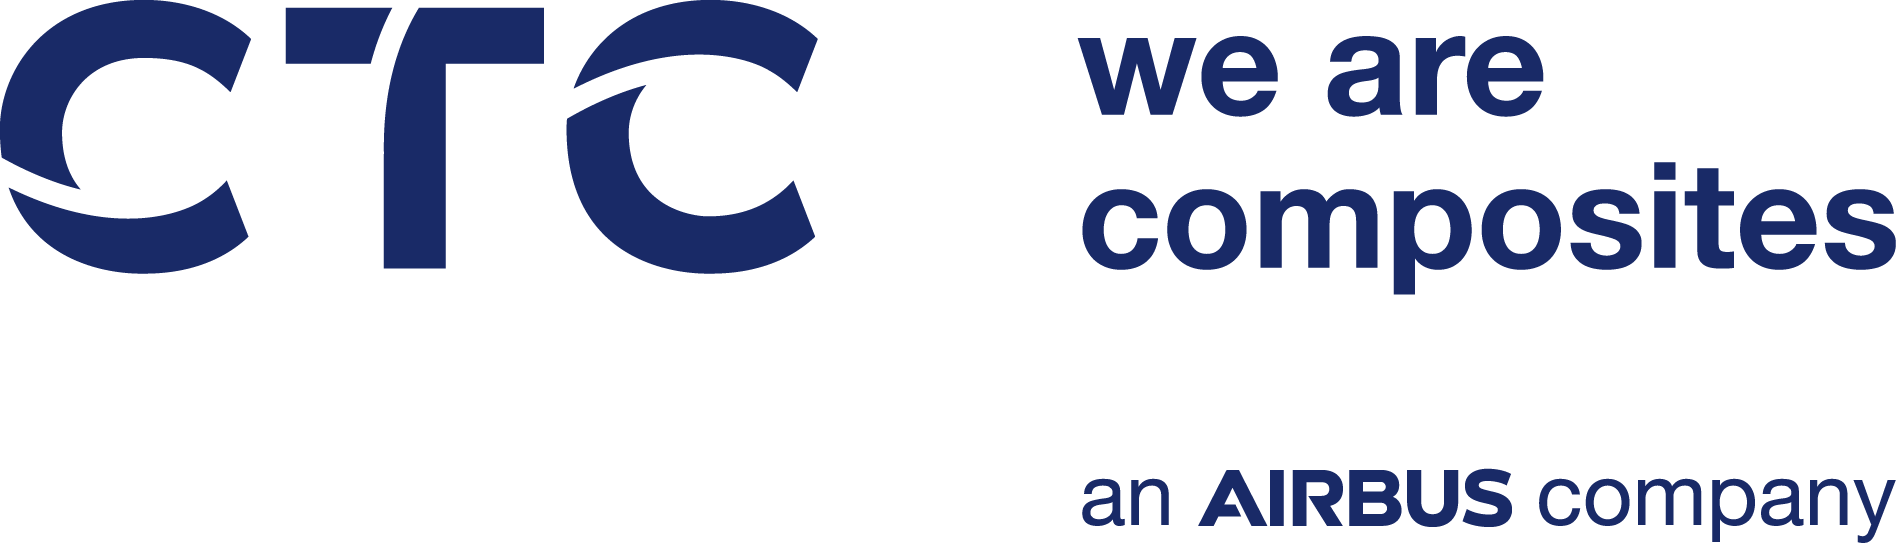 Logo CTC GmbH